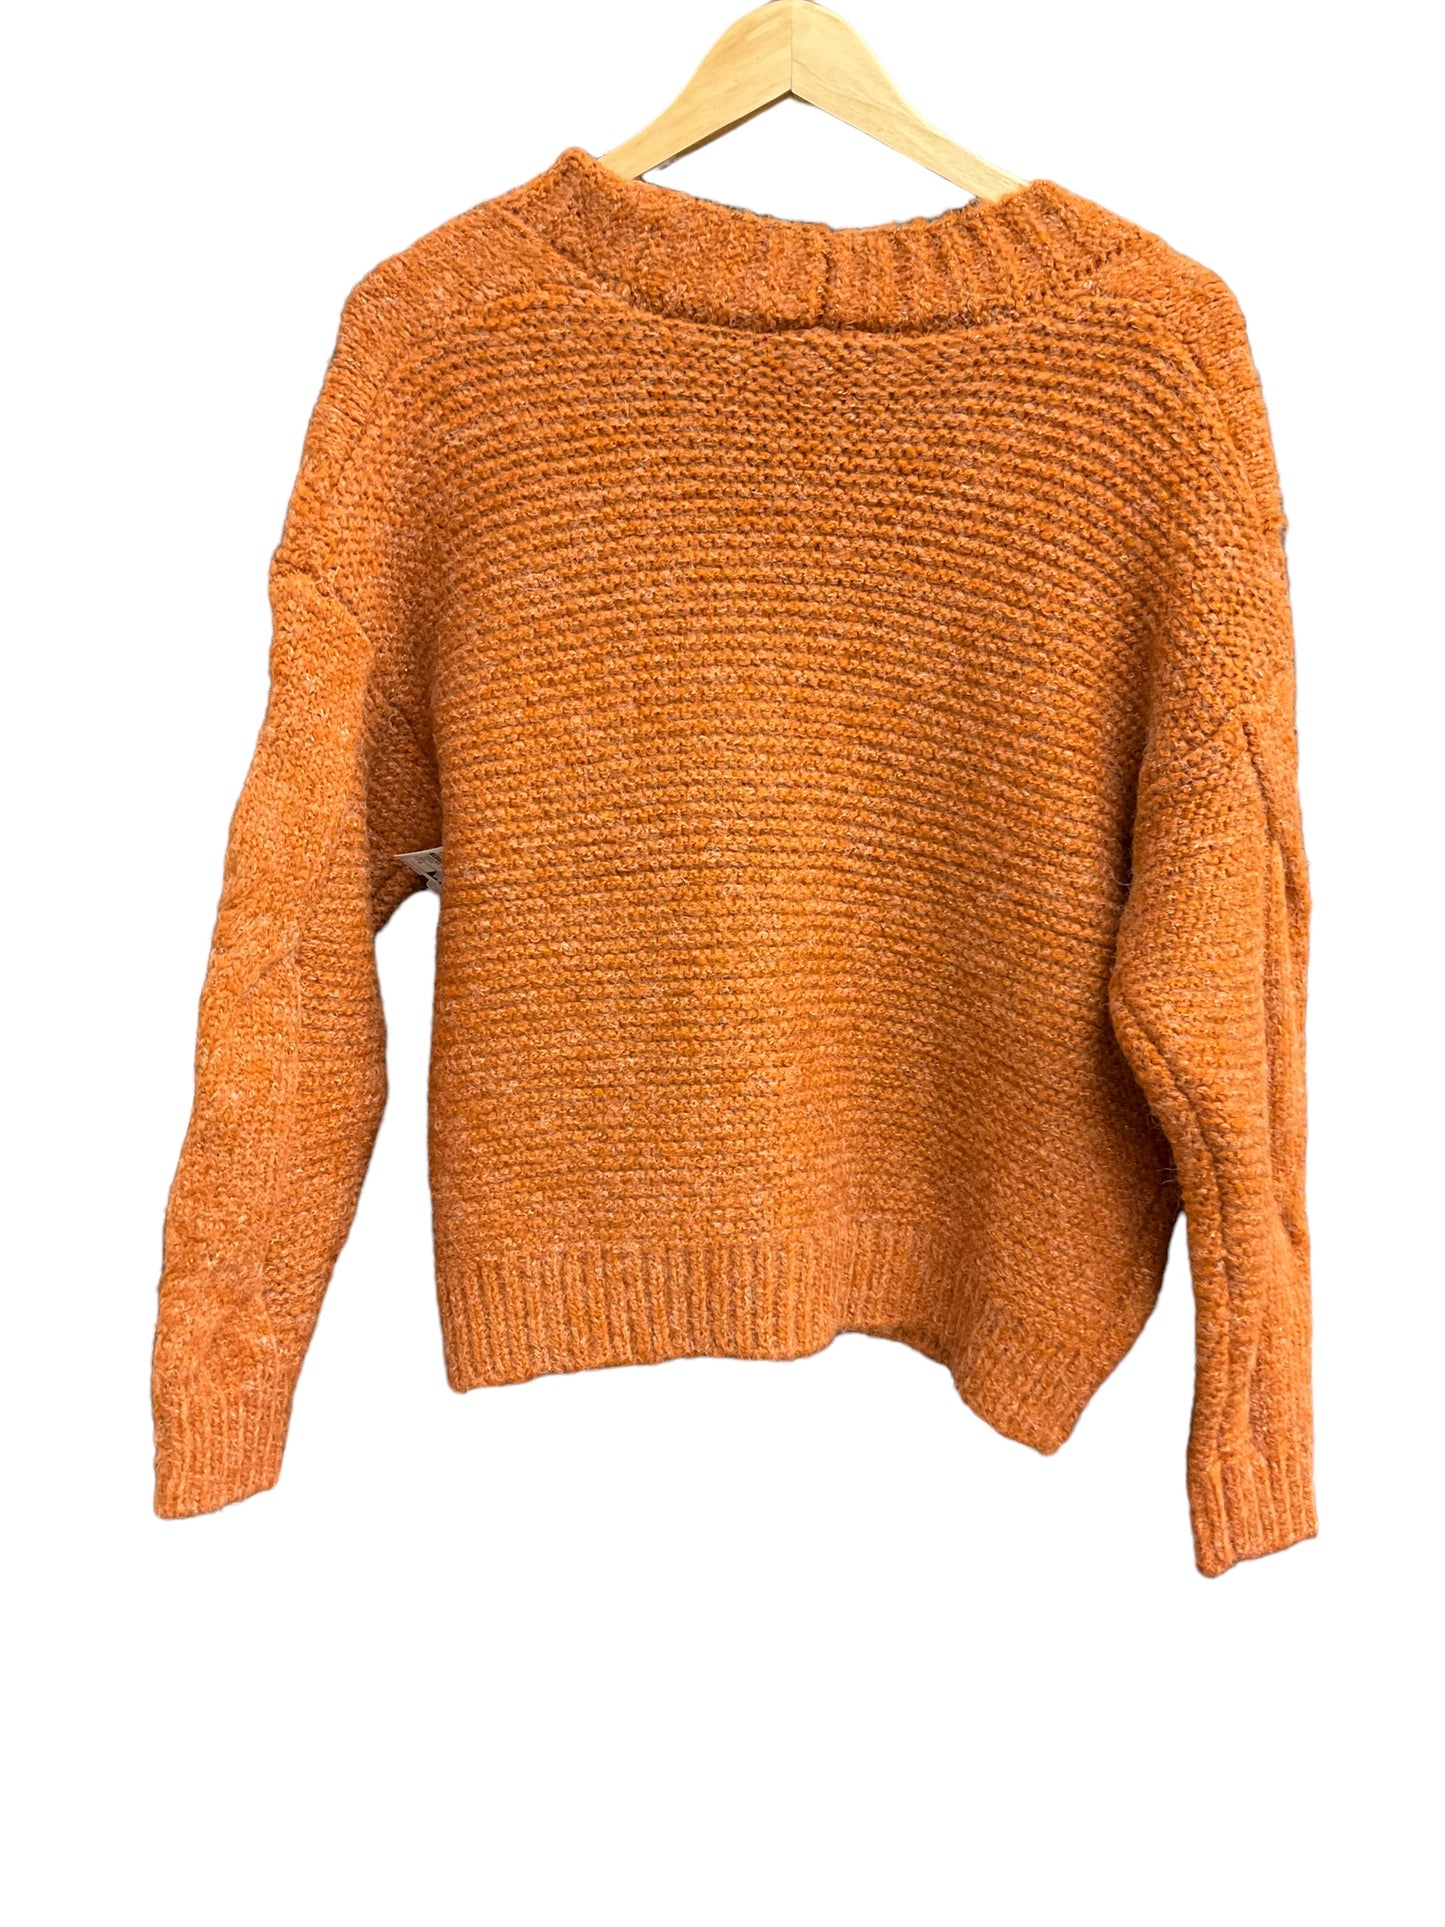 Sweater Cardigan By Mystree  Size: S